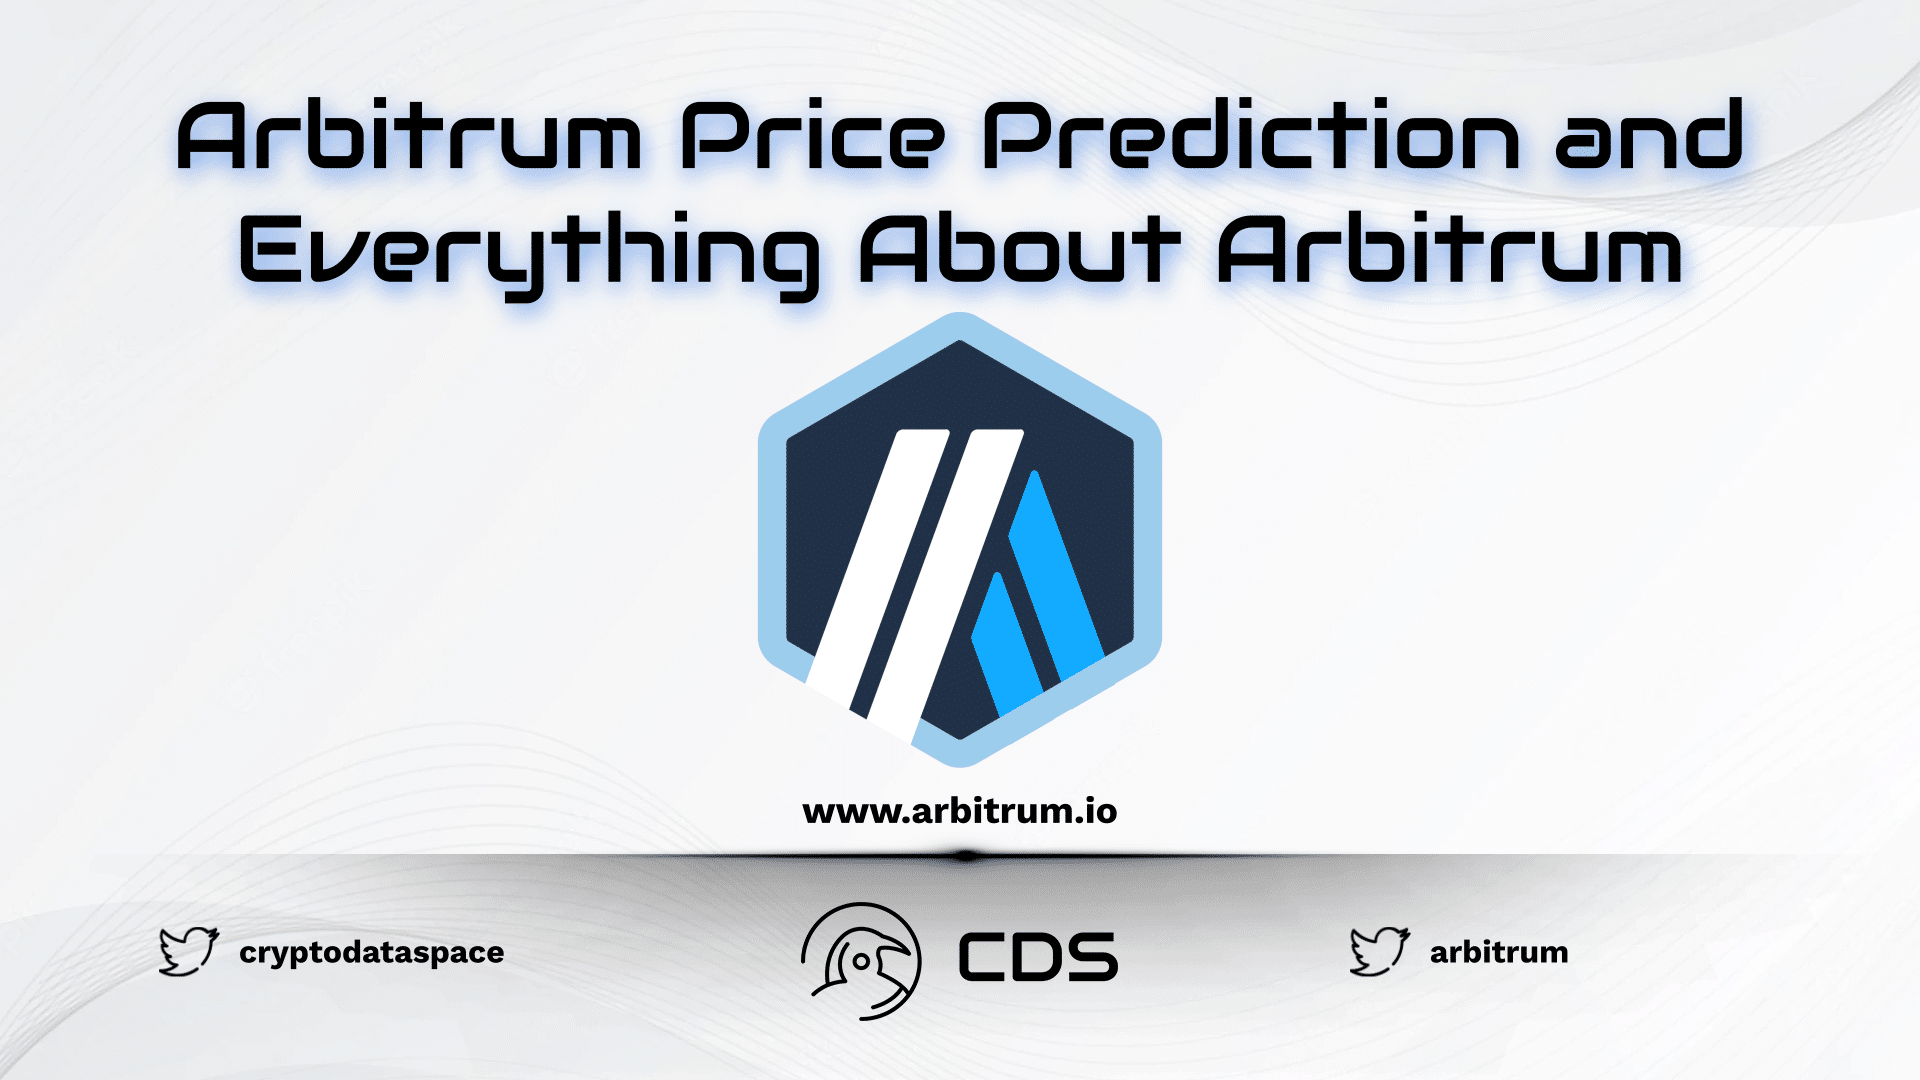 Arbitrum Price Prediction and Everything About Arbitrum